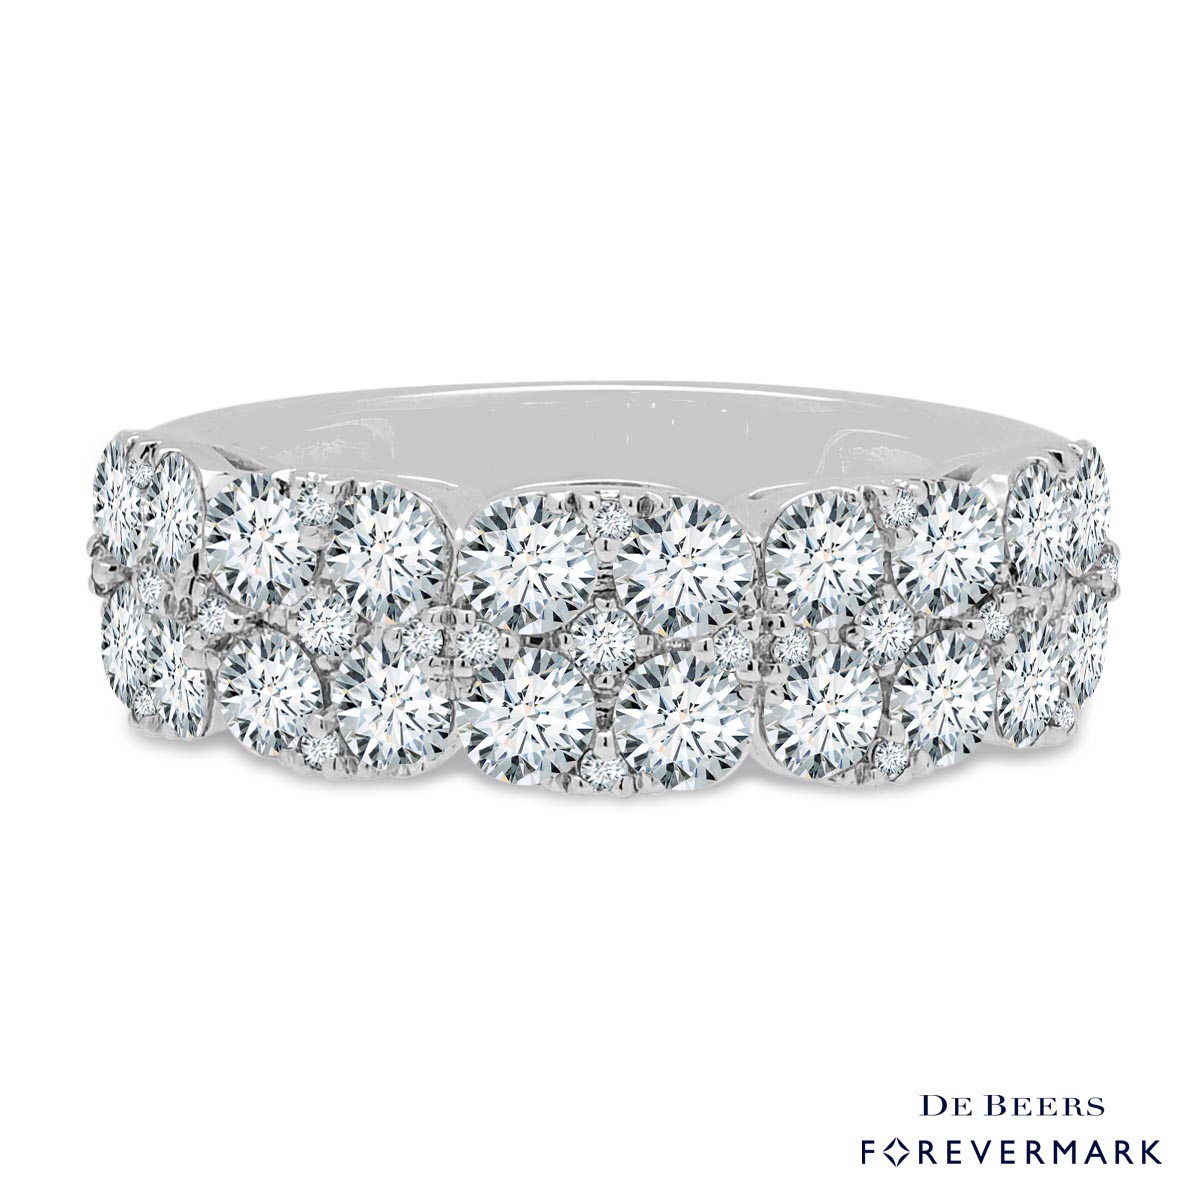 De Beers Forevermark Diamond Ring in 18kt White Gold (2 1/3ct tw)